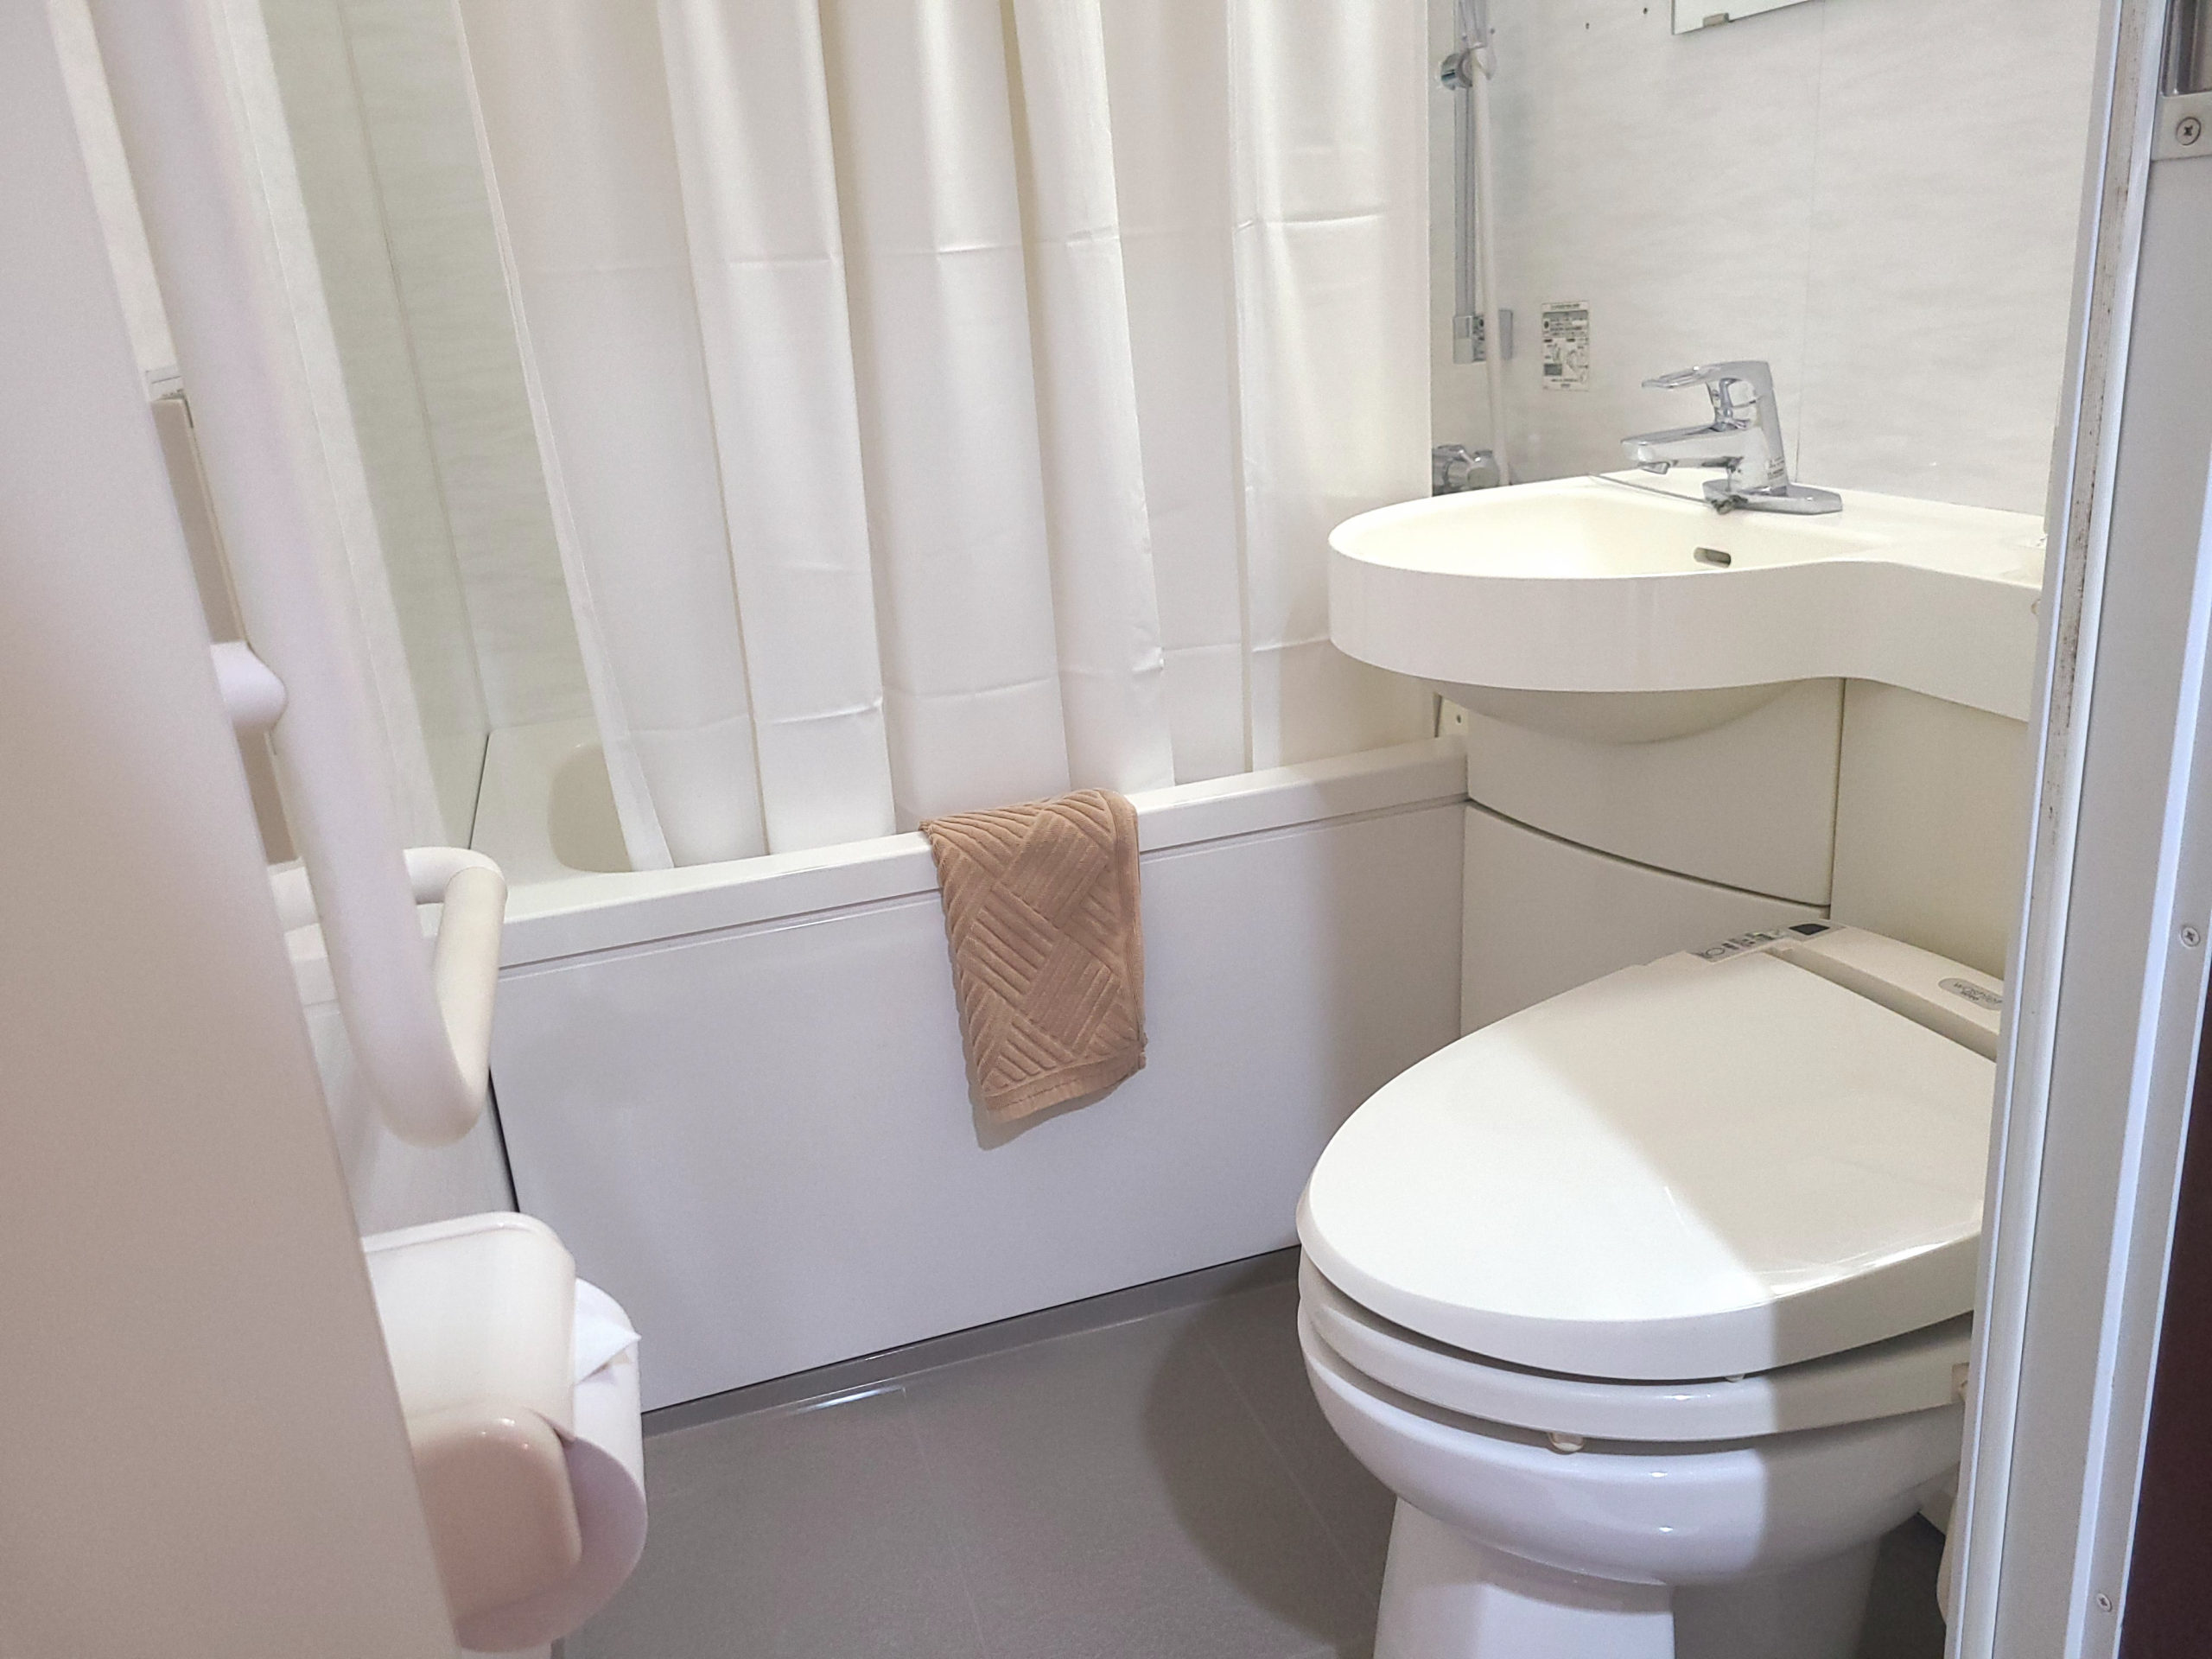 The unit bathroom features a high-tech washlet toilet